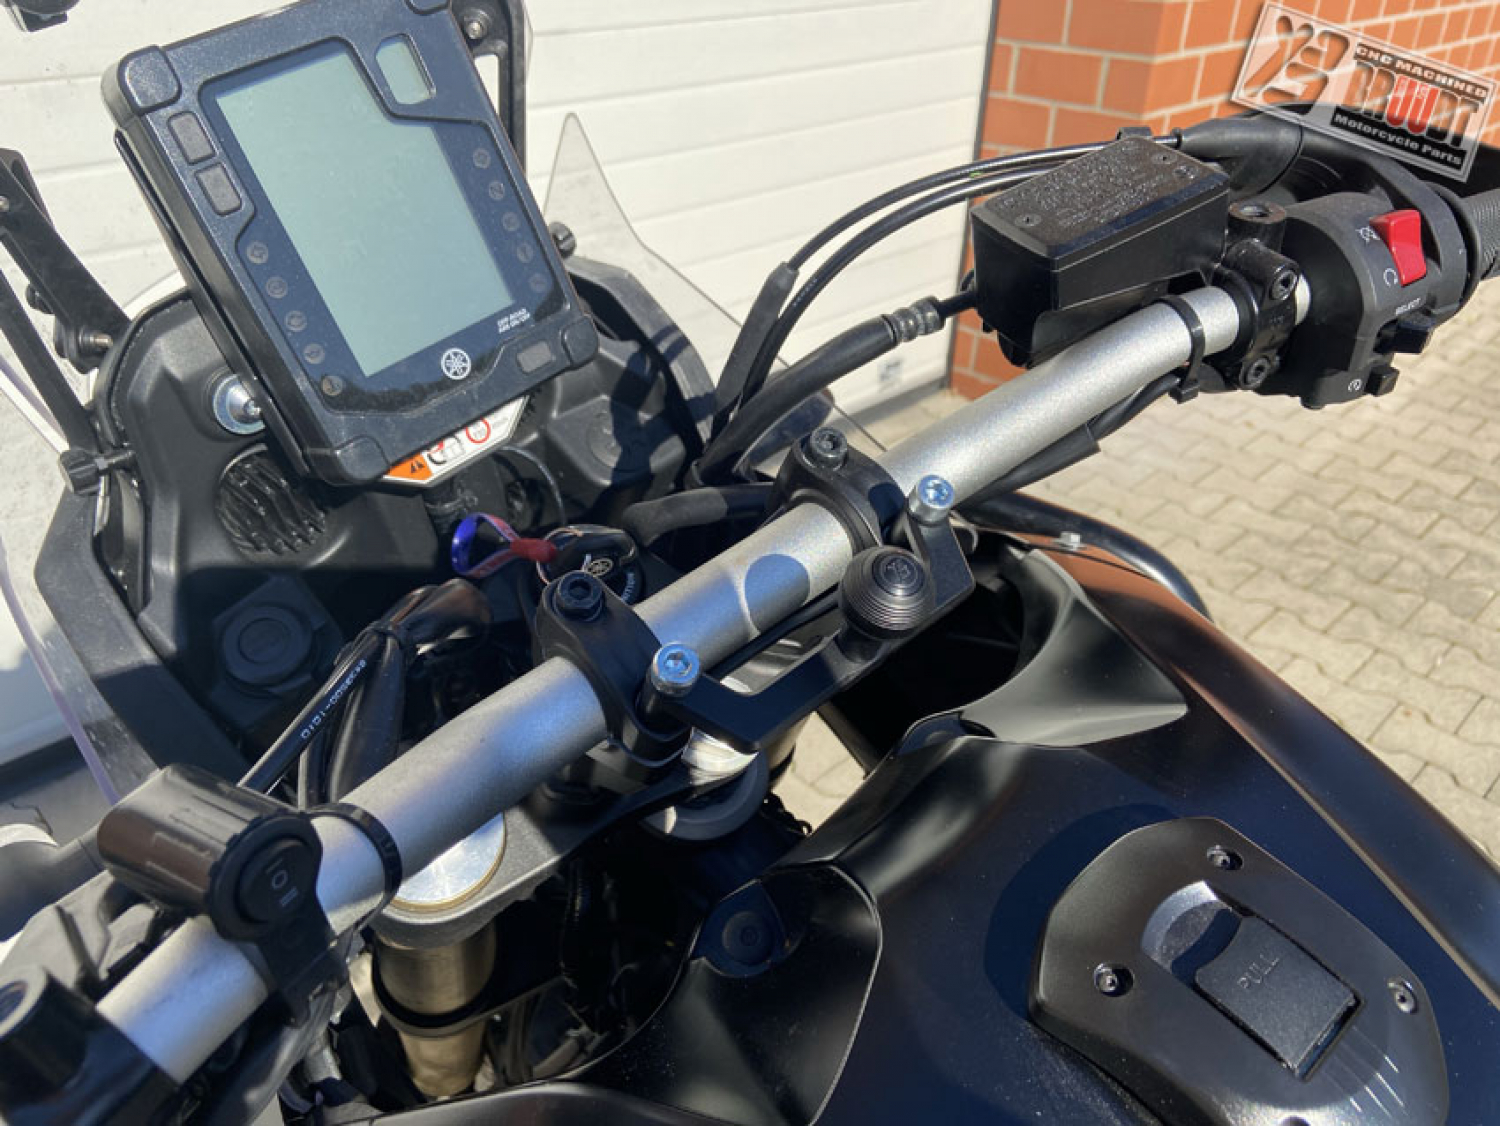 BRUUDT navigation mounting set for Yamaha Ténéré 700 year 2019 and later